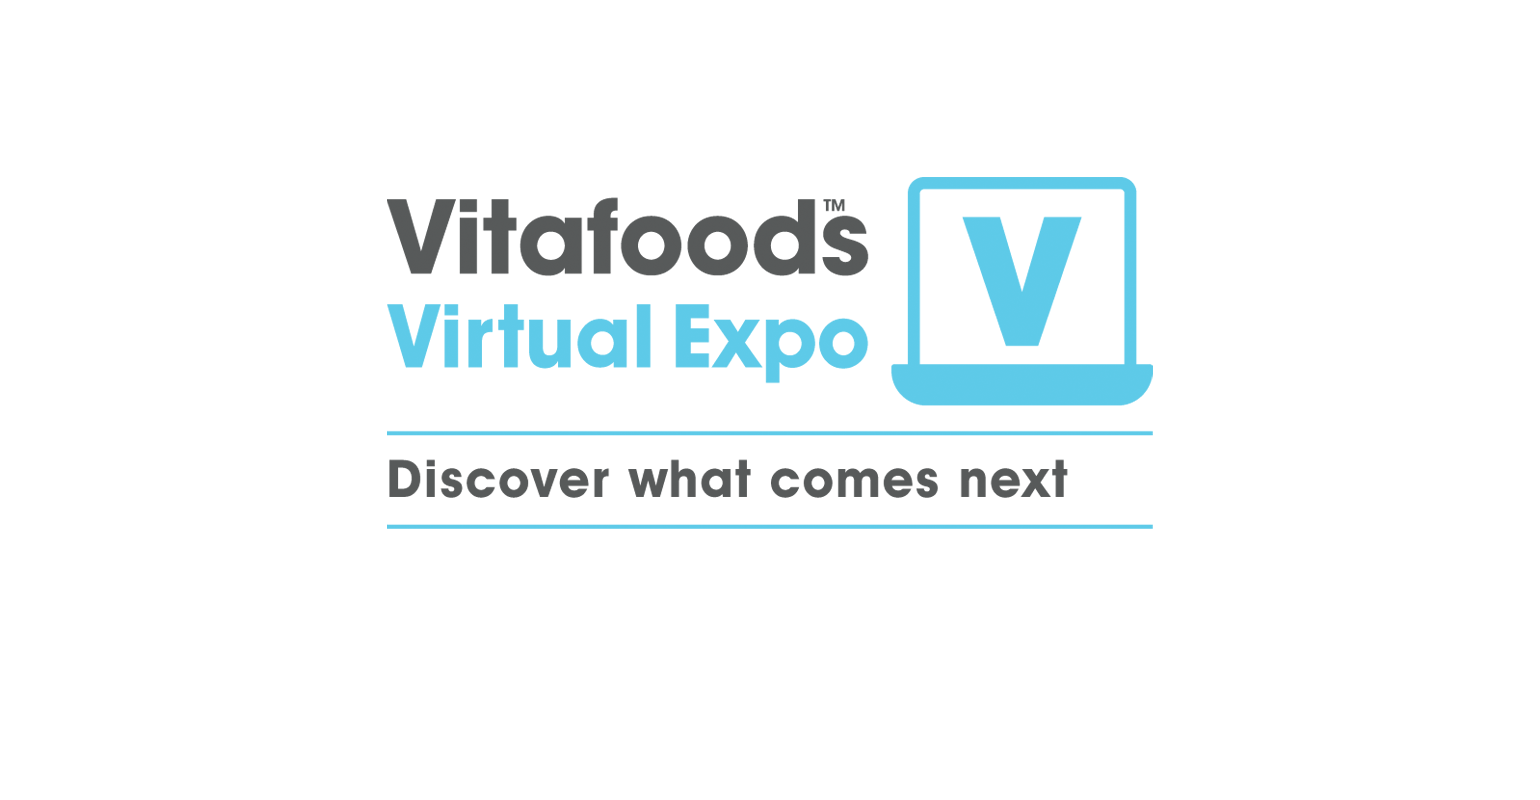 vitafoods virtual expo logo